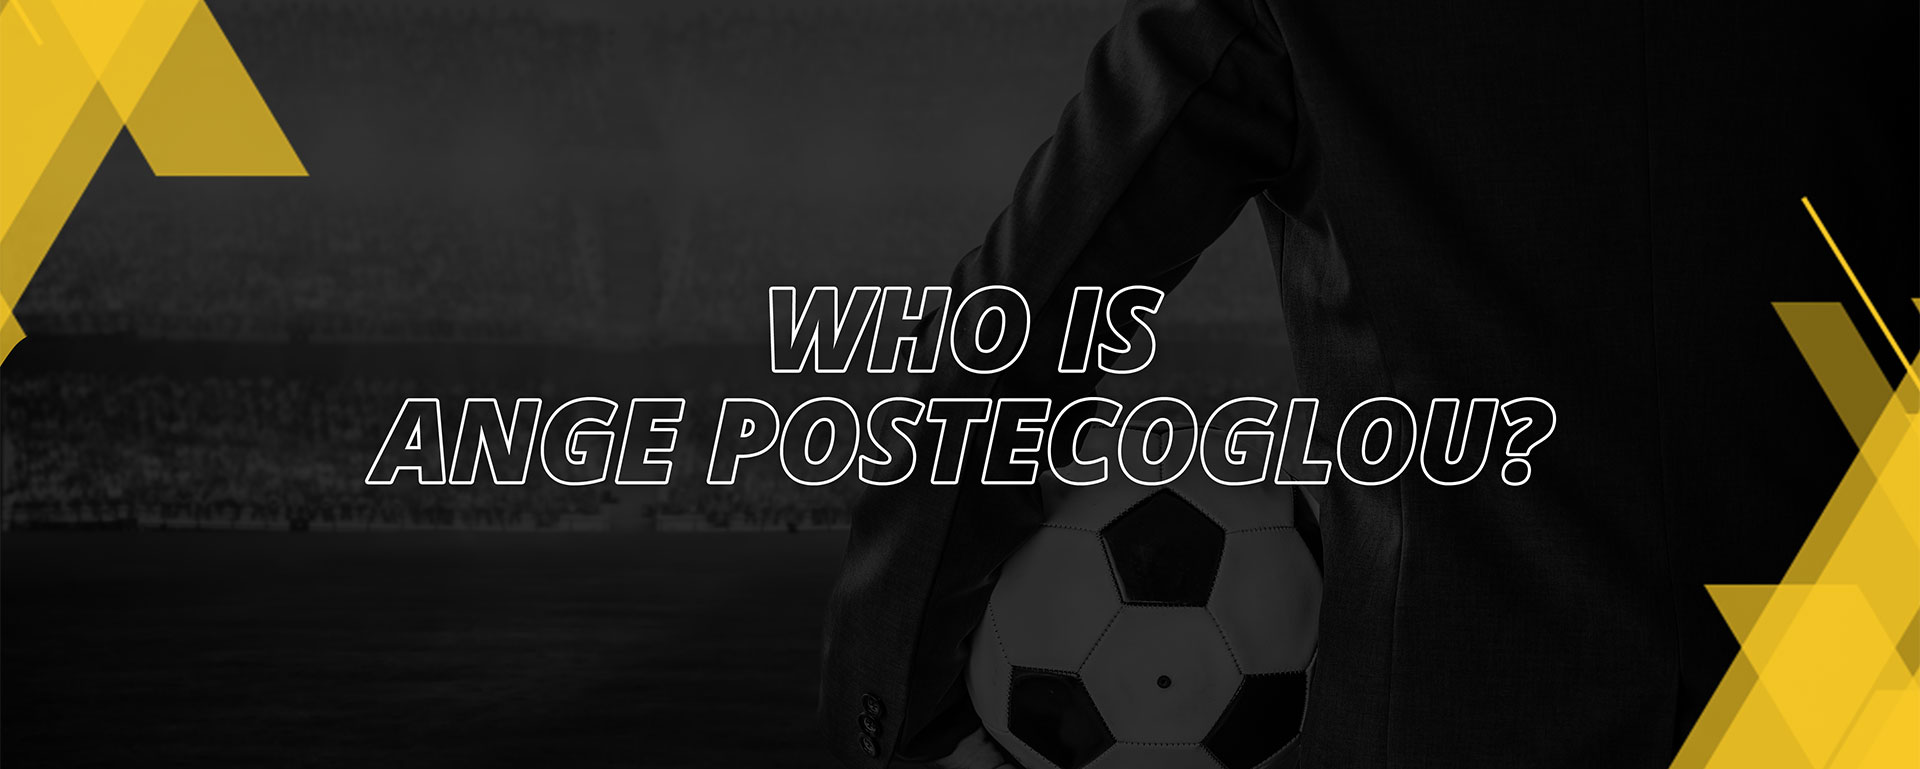 WHO IS ANGE POSTECOGLOU?